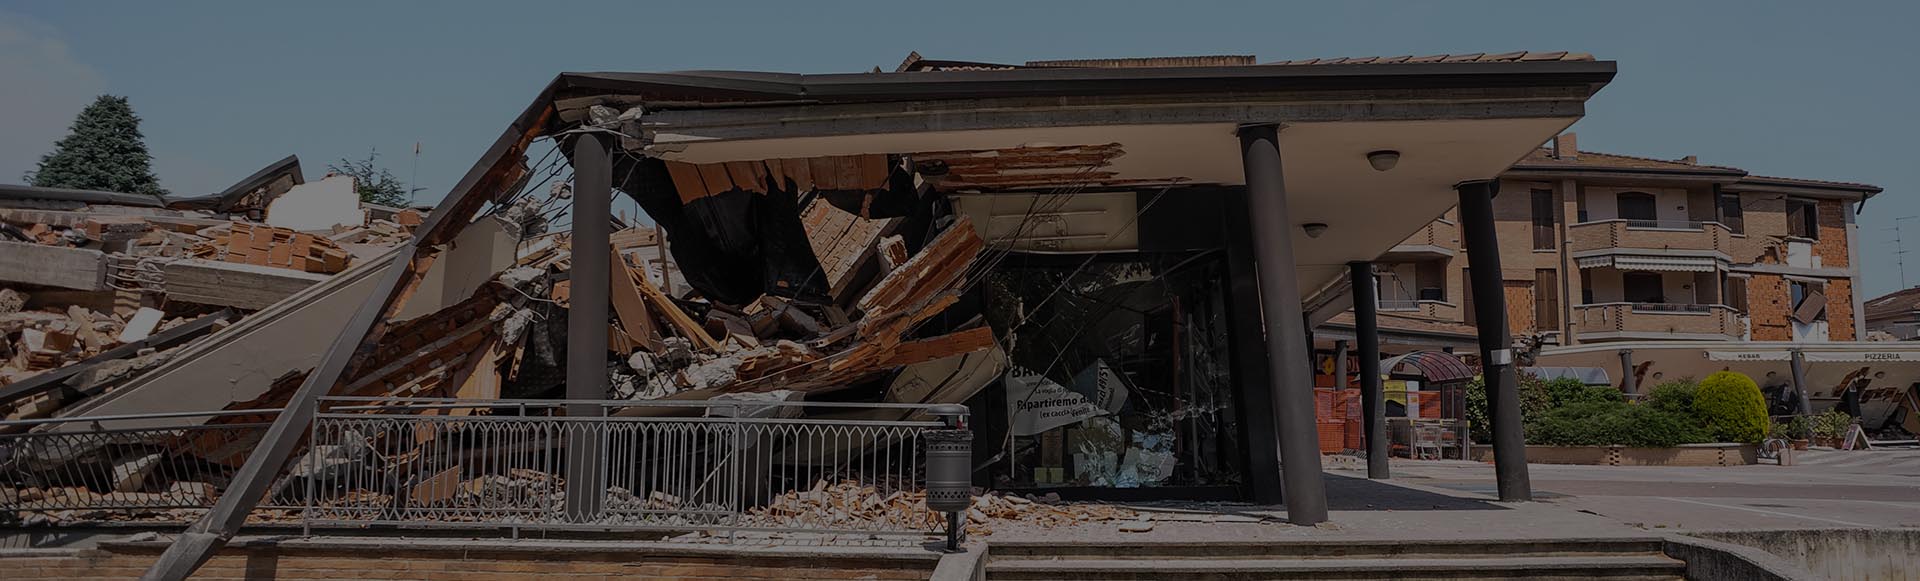 Dallas Houston School District Property Damage Insurance Claim